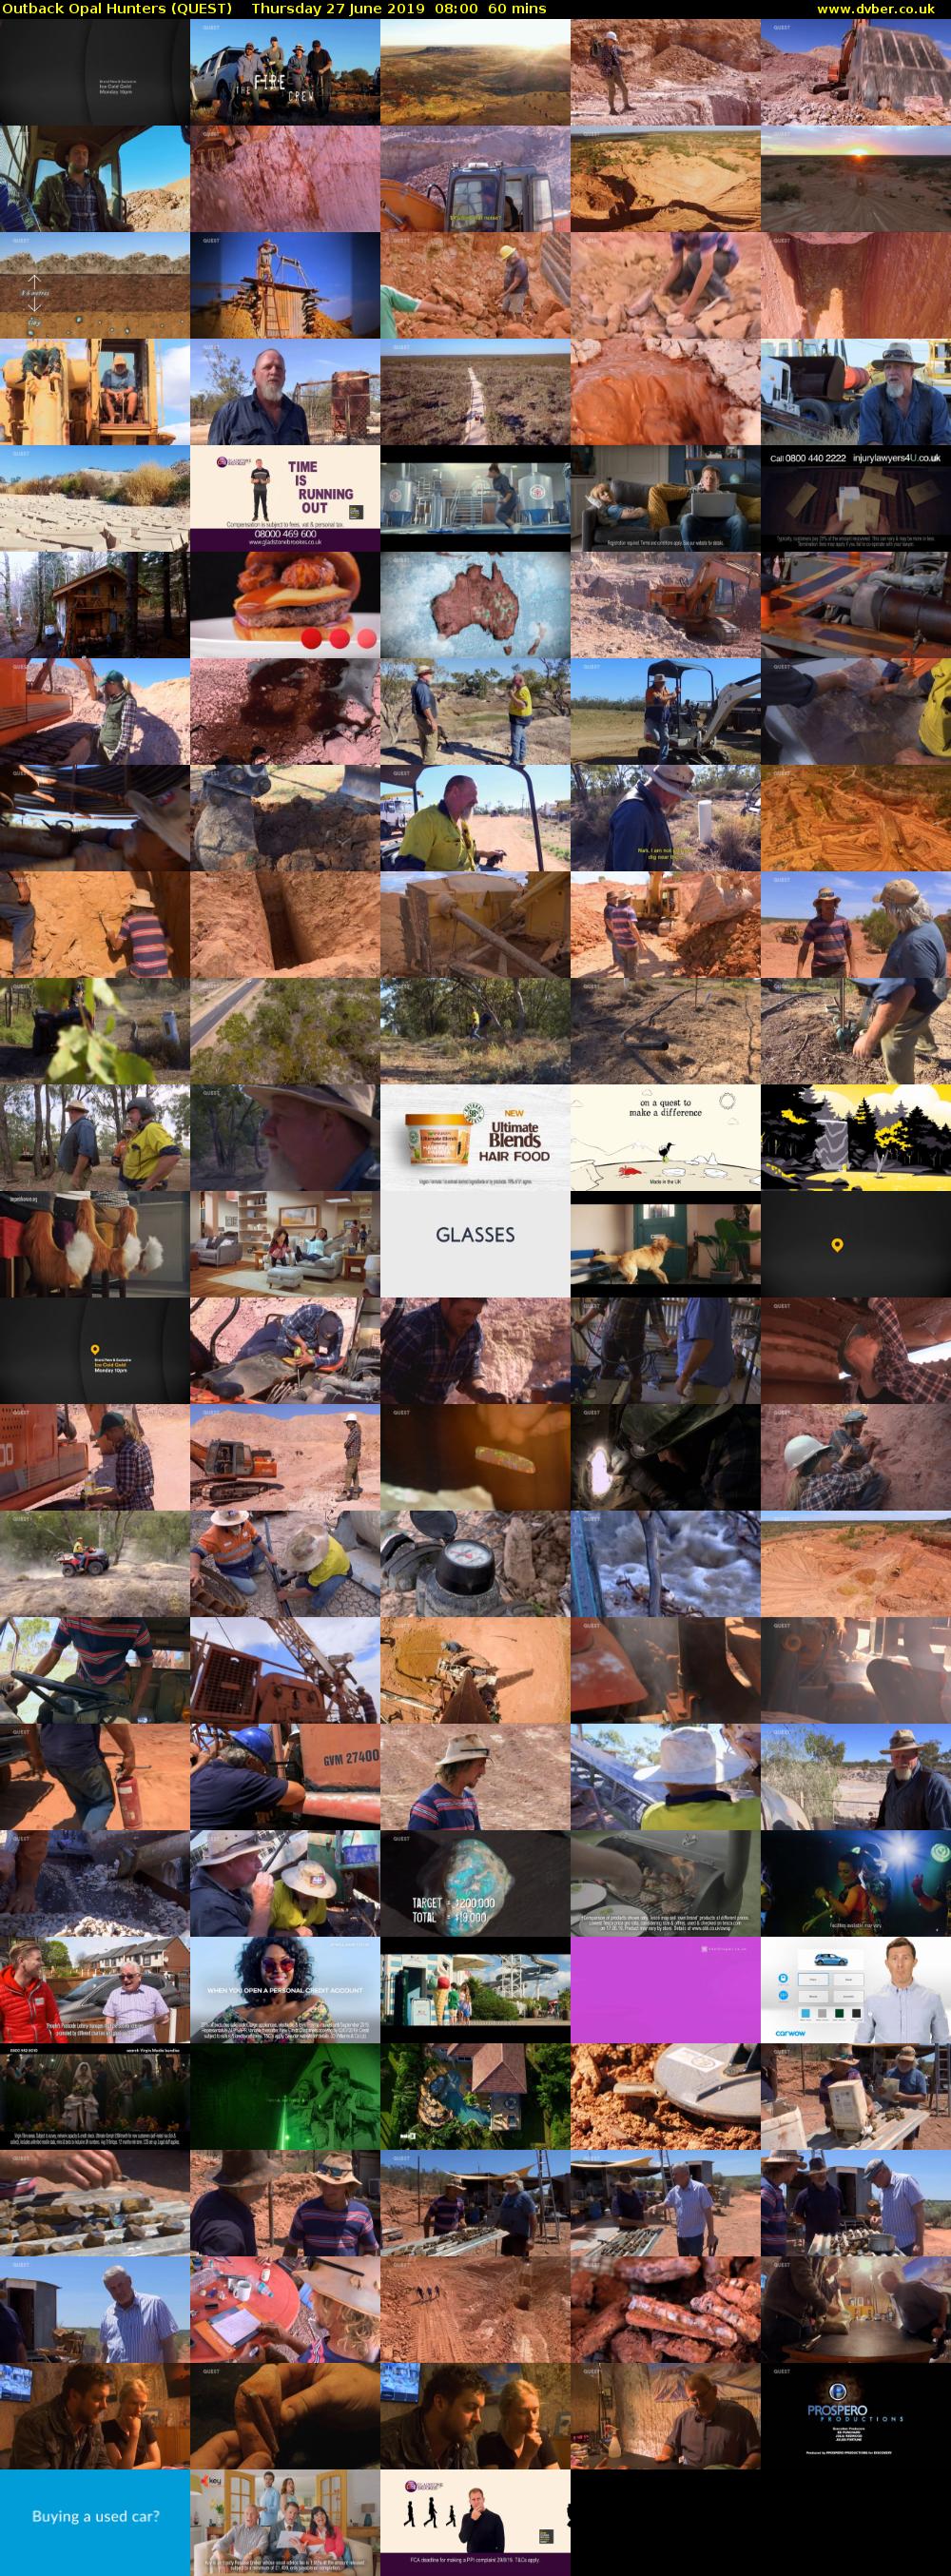 Outback Opal Hunters (QUEST) Thursday 27 June 2019 08:00 - 09:00